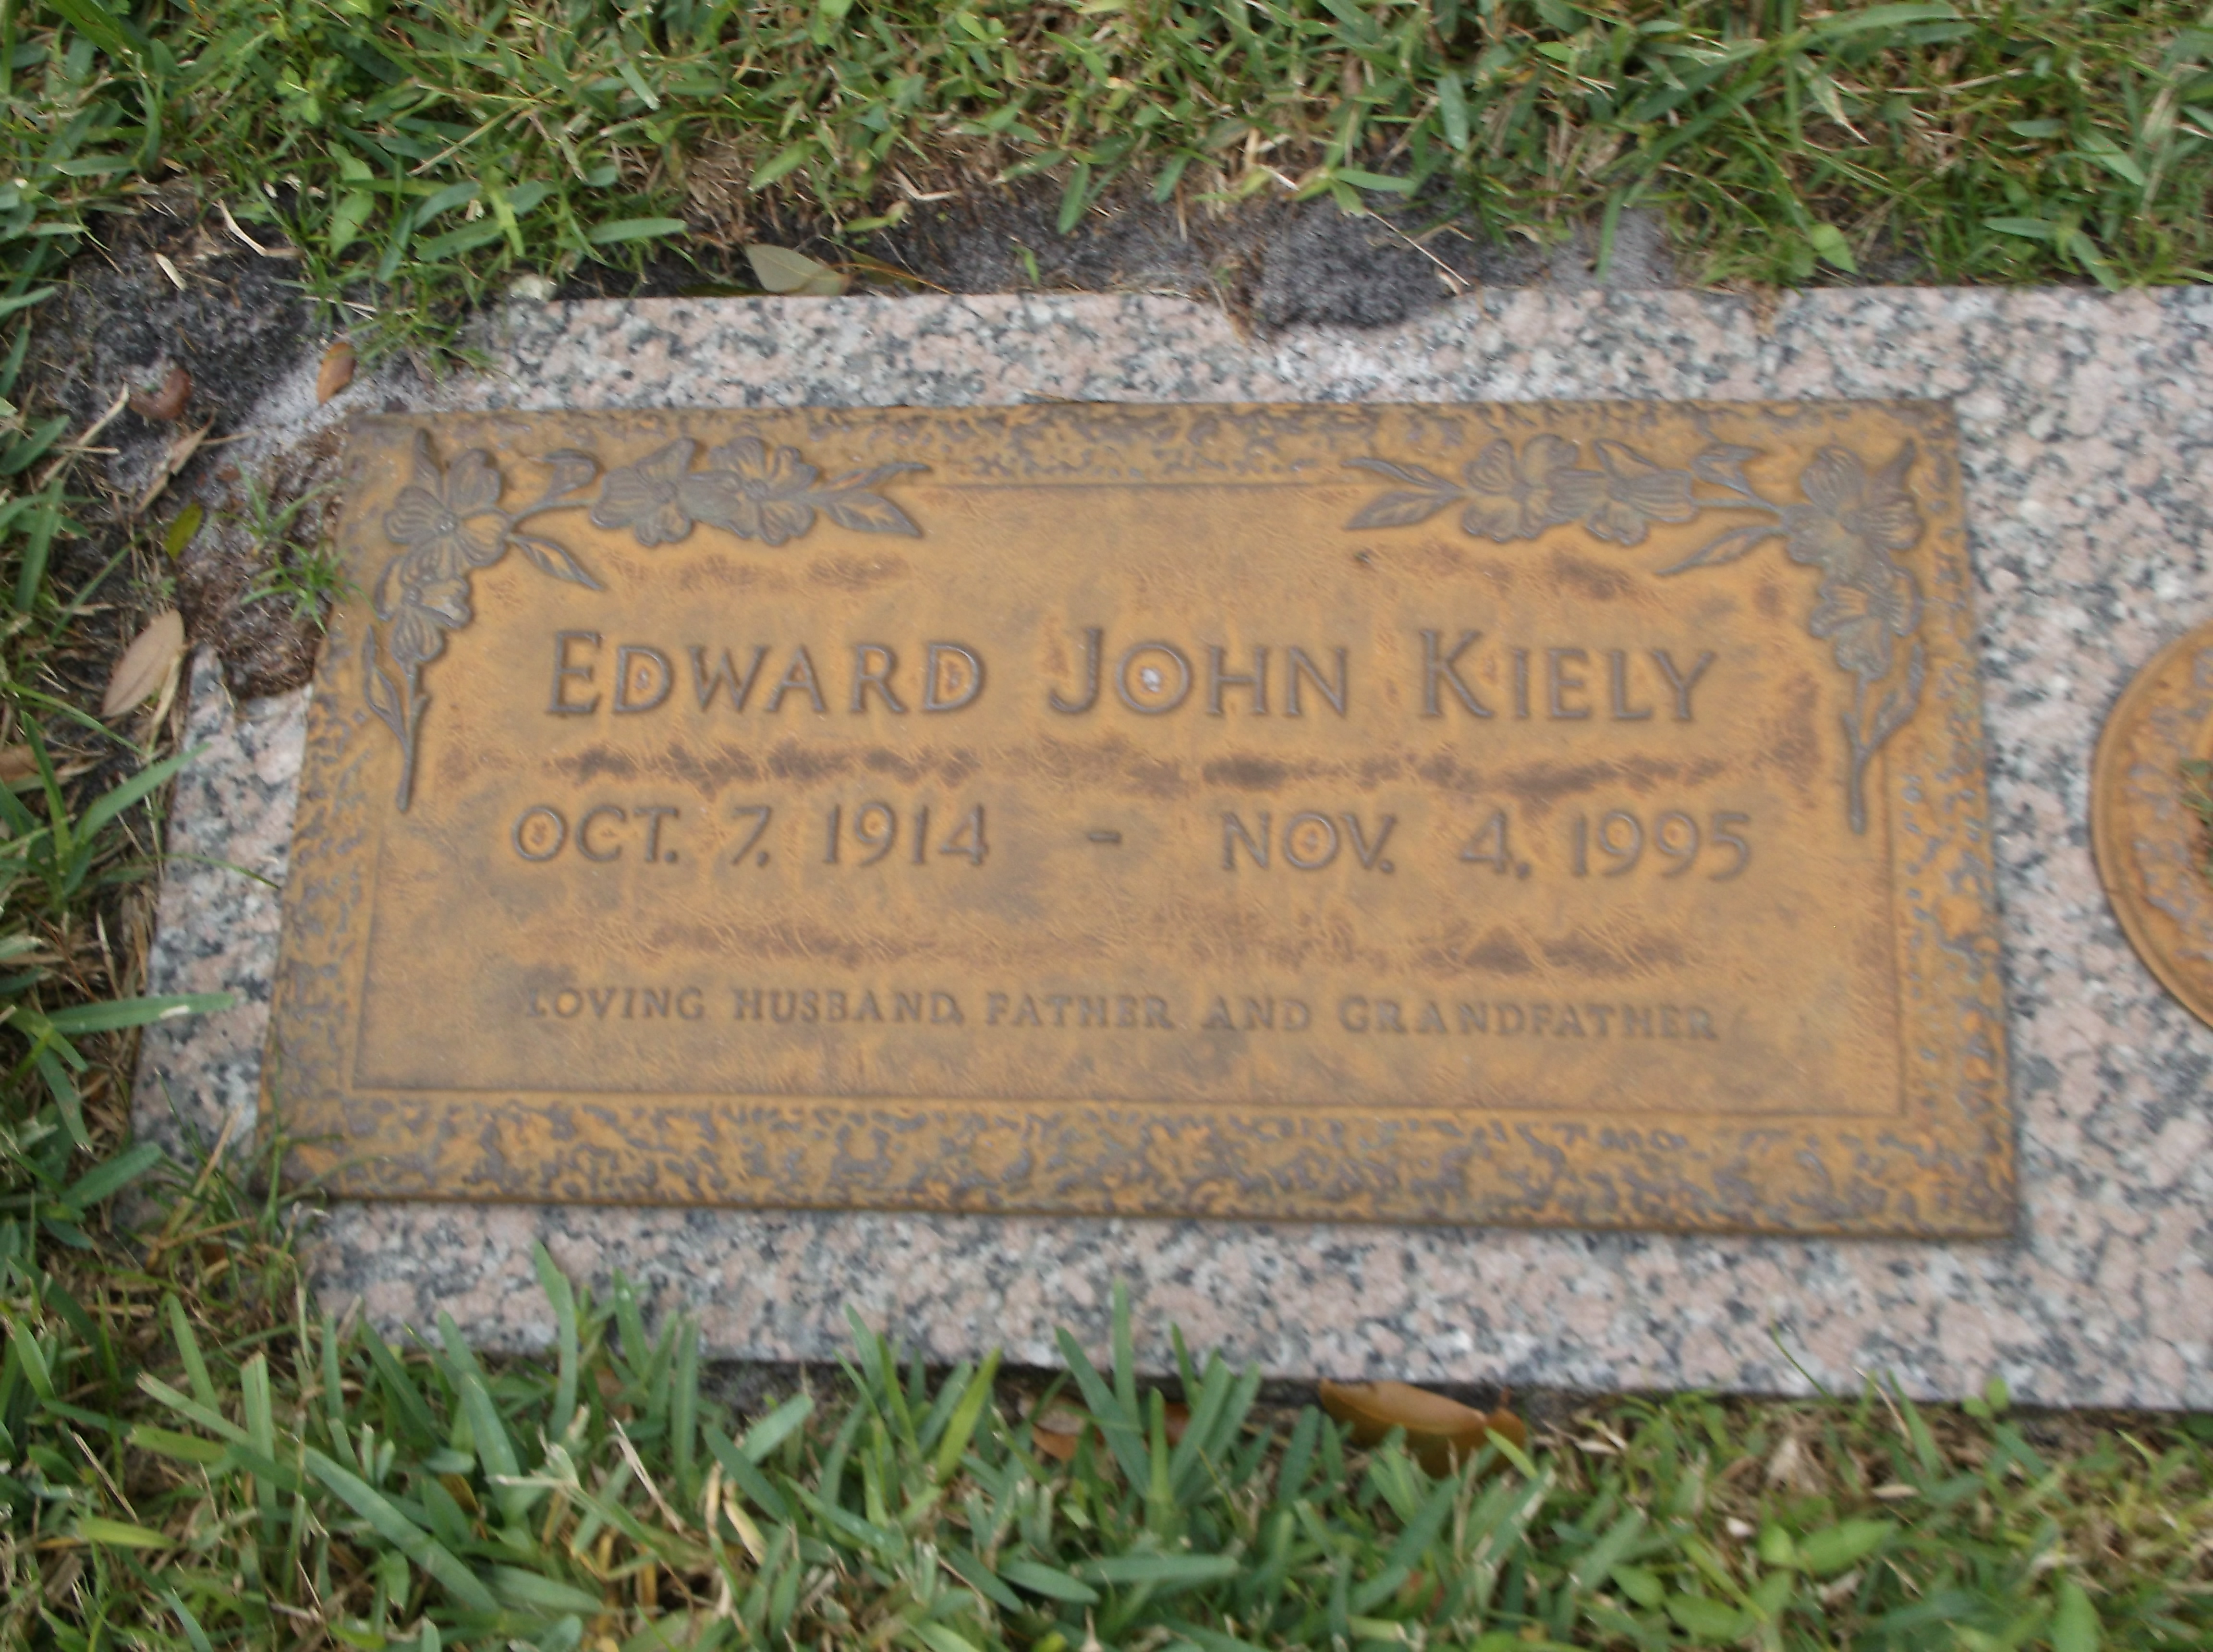 Edward John Kiely